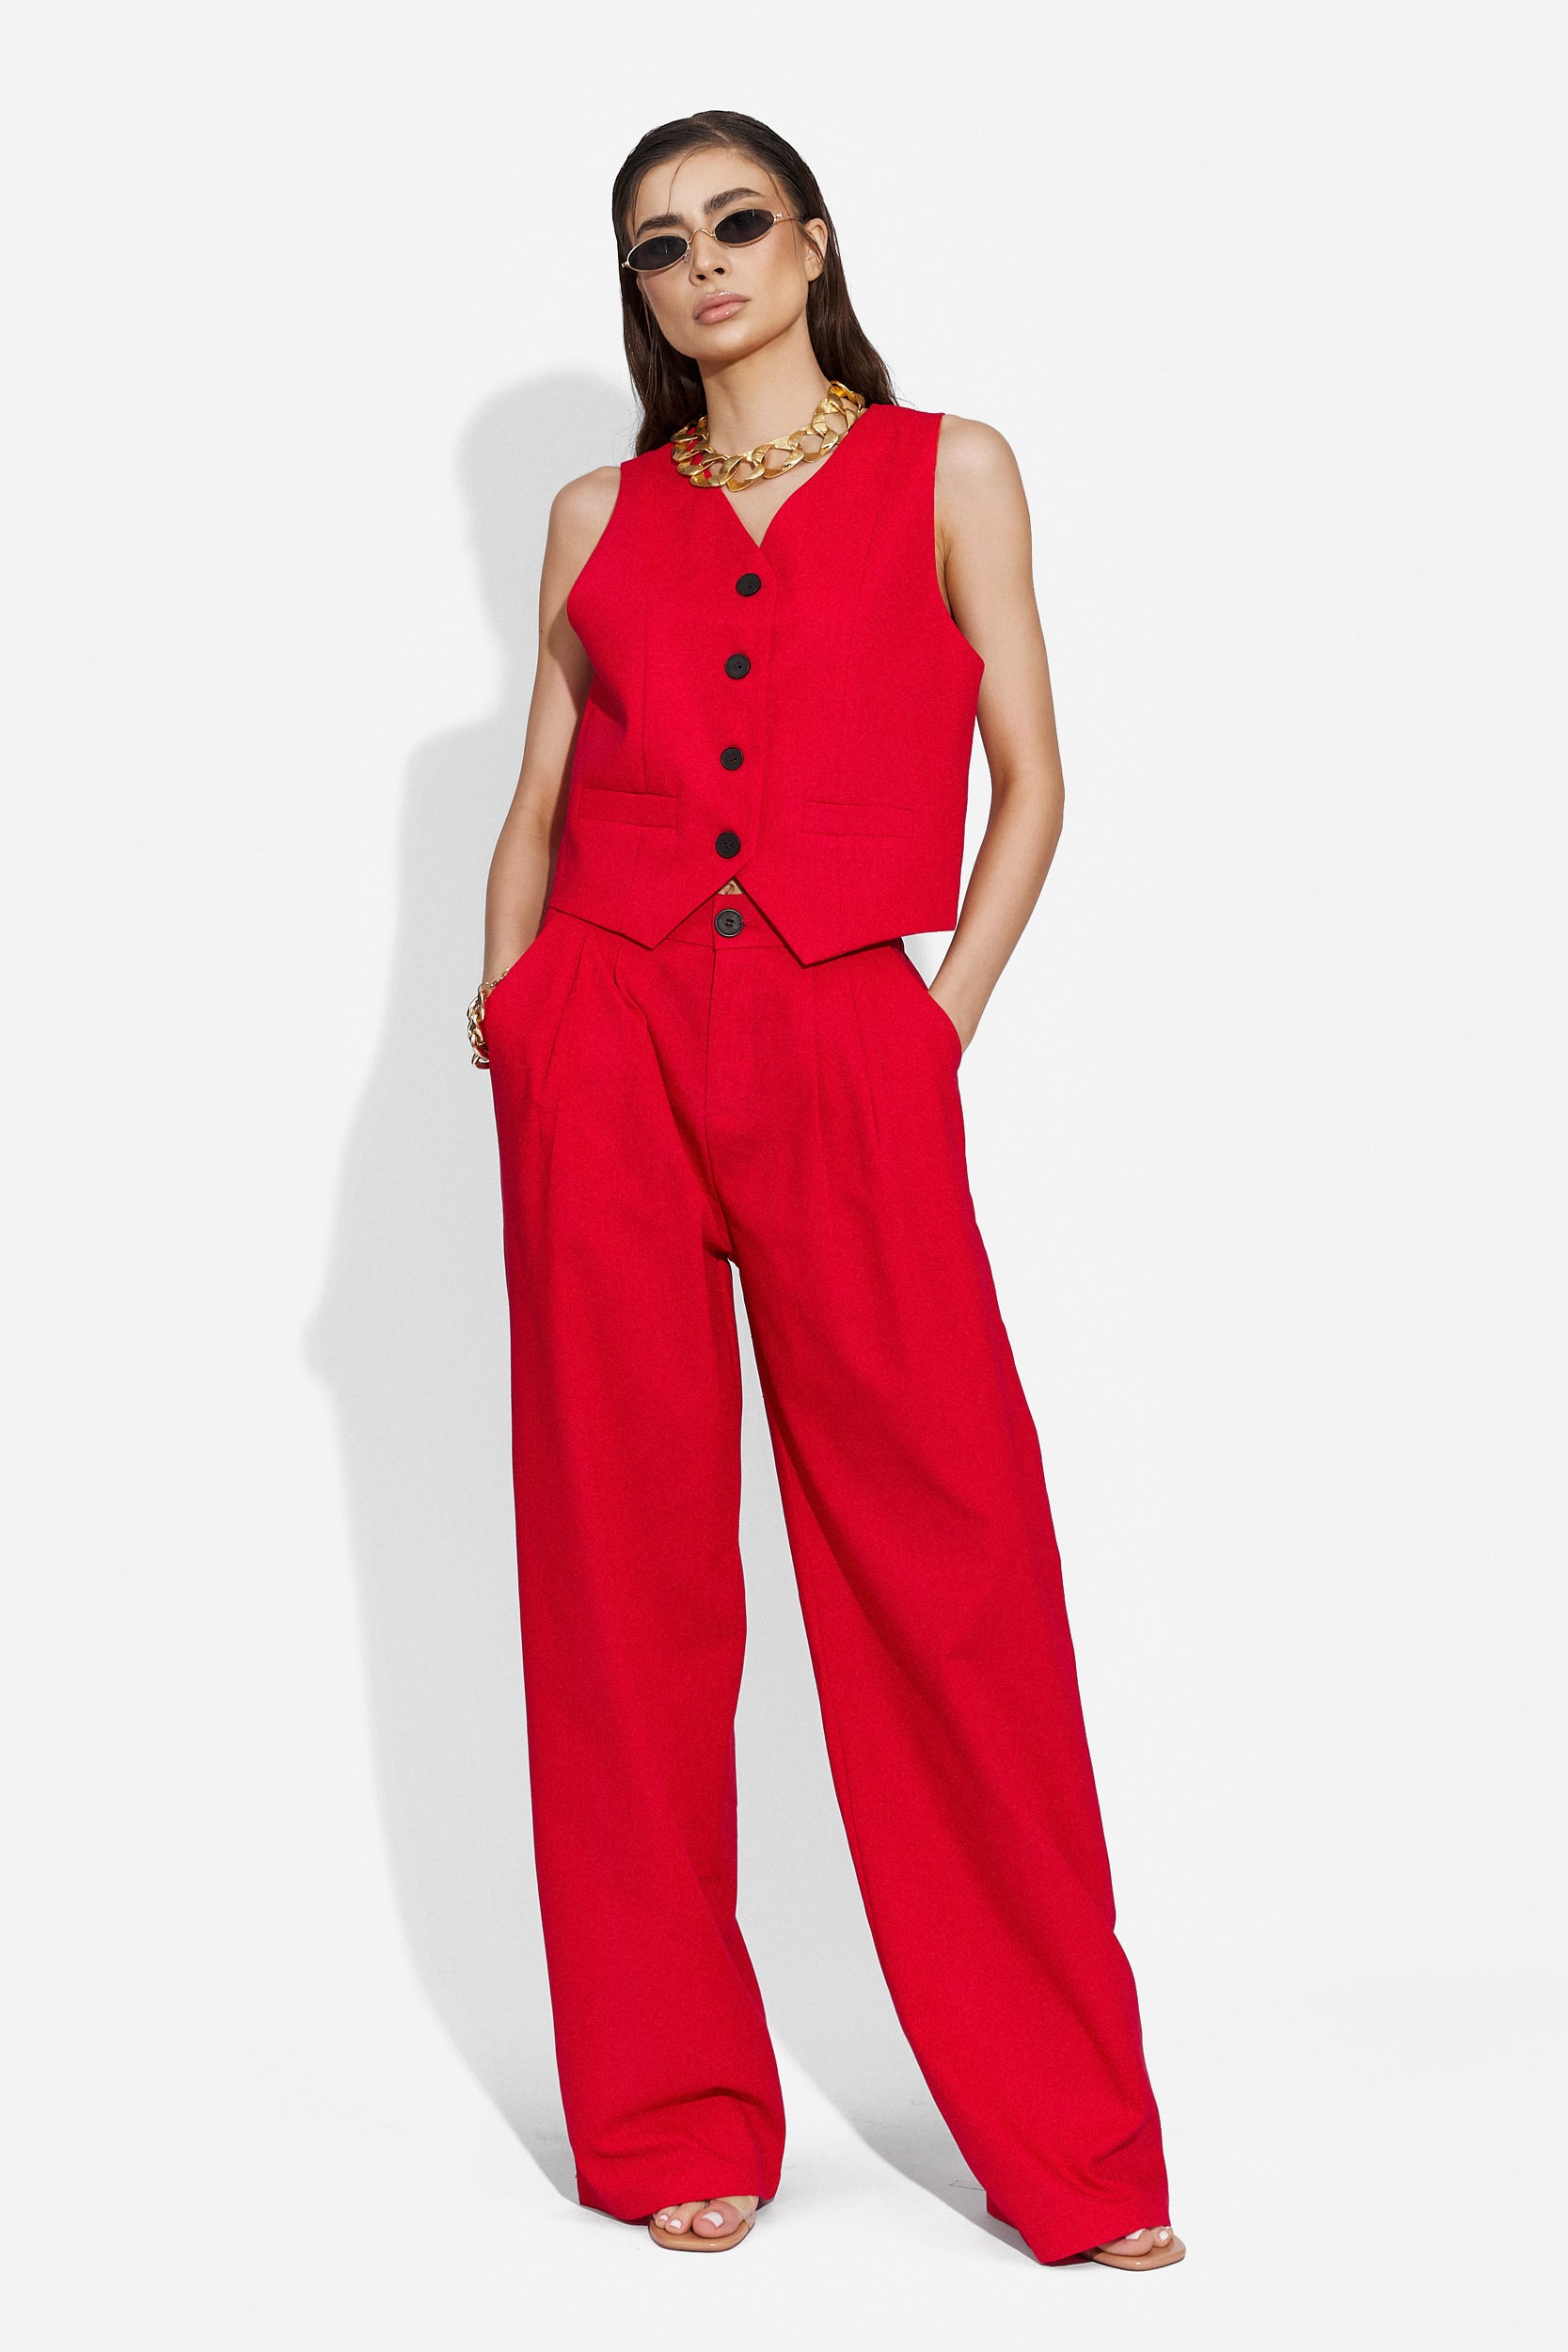 Velasy Bogas red casual ladies pants suit